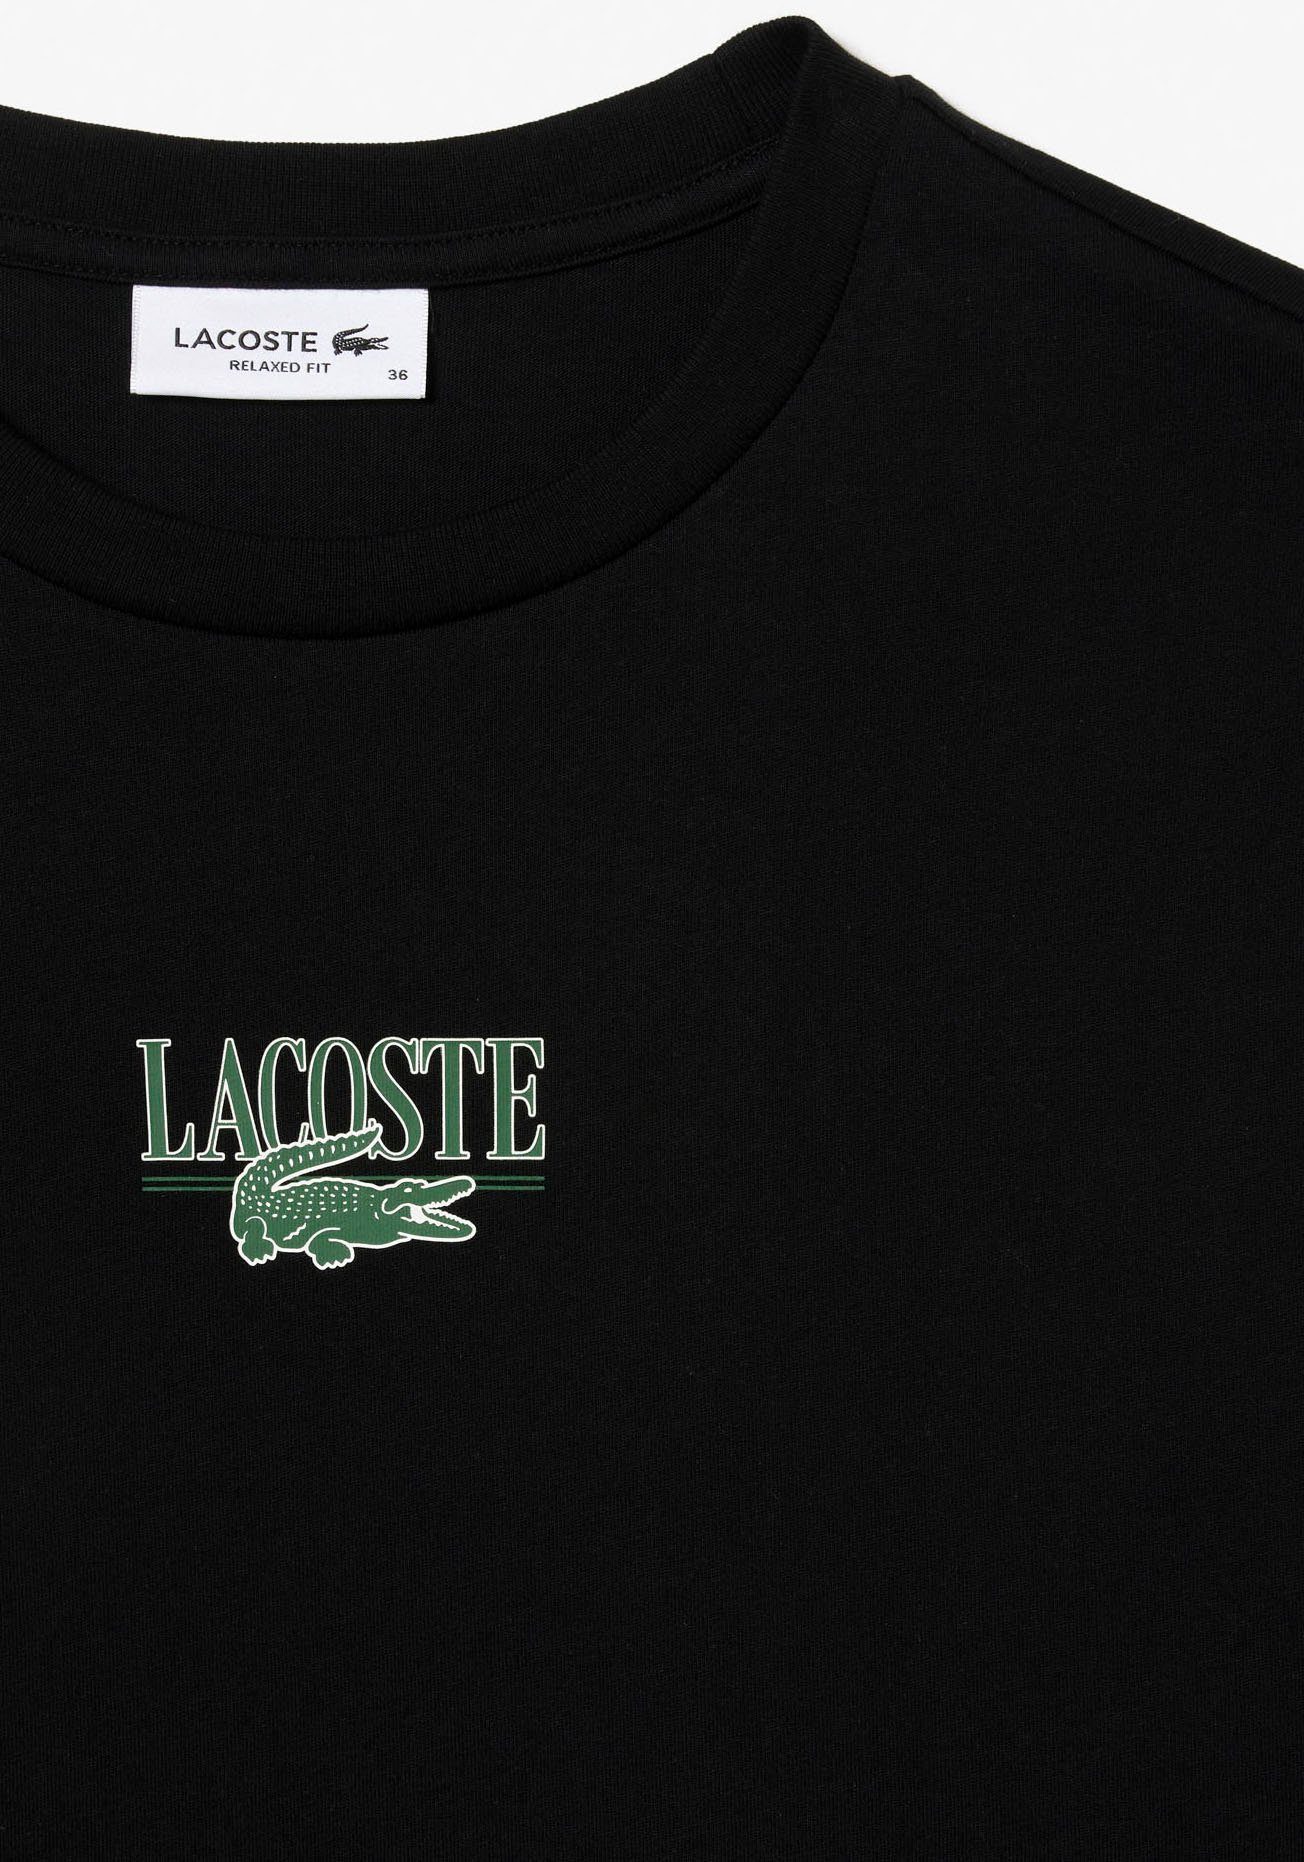 Lacoste BLACK T-Shirt Markenlabel mit